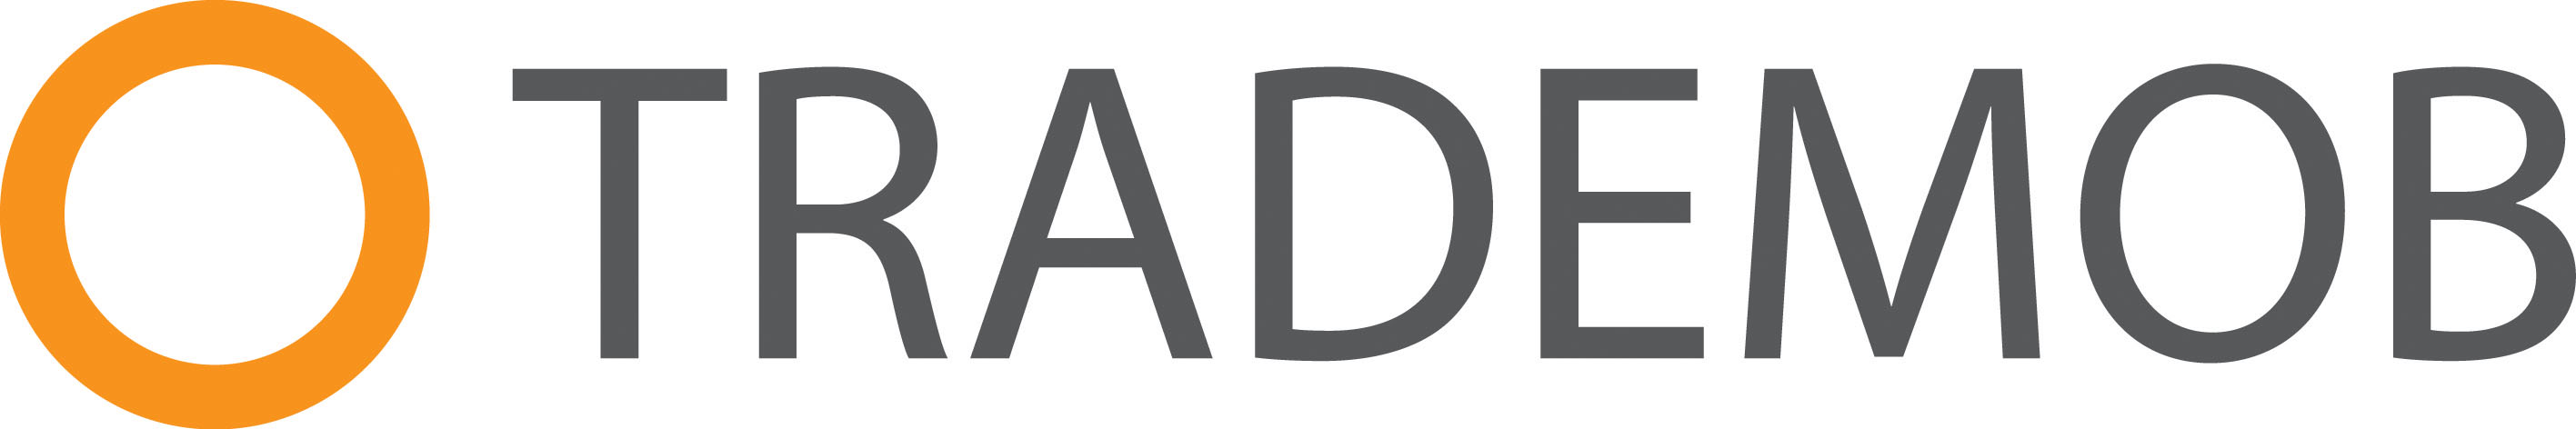 Trademob Logo